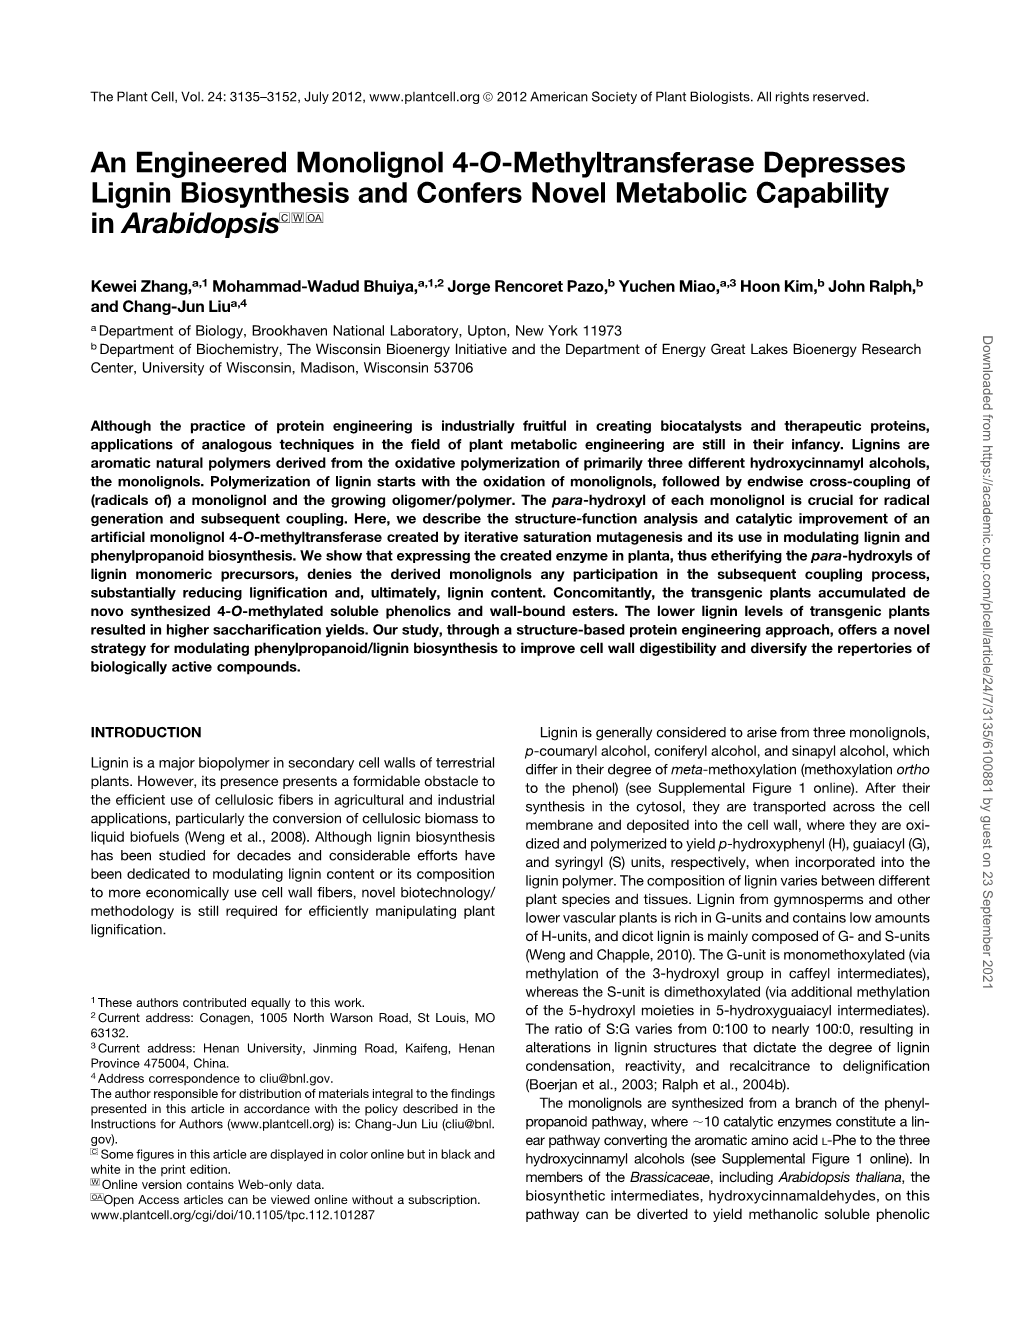 An Engineered Monolignol 4-O-Methyltransferase Depresses Lignin Biosynthesis and Confers Novel Metabolic Capability in Arabidopsisc W OA